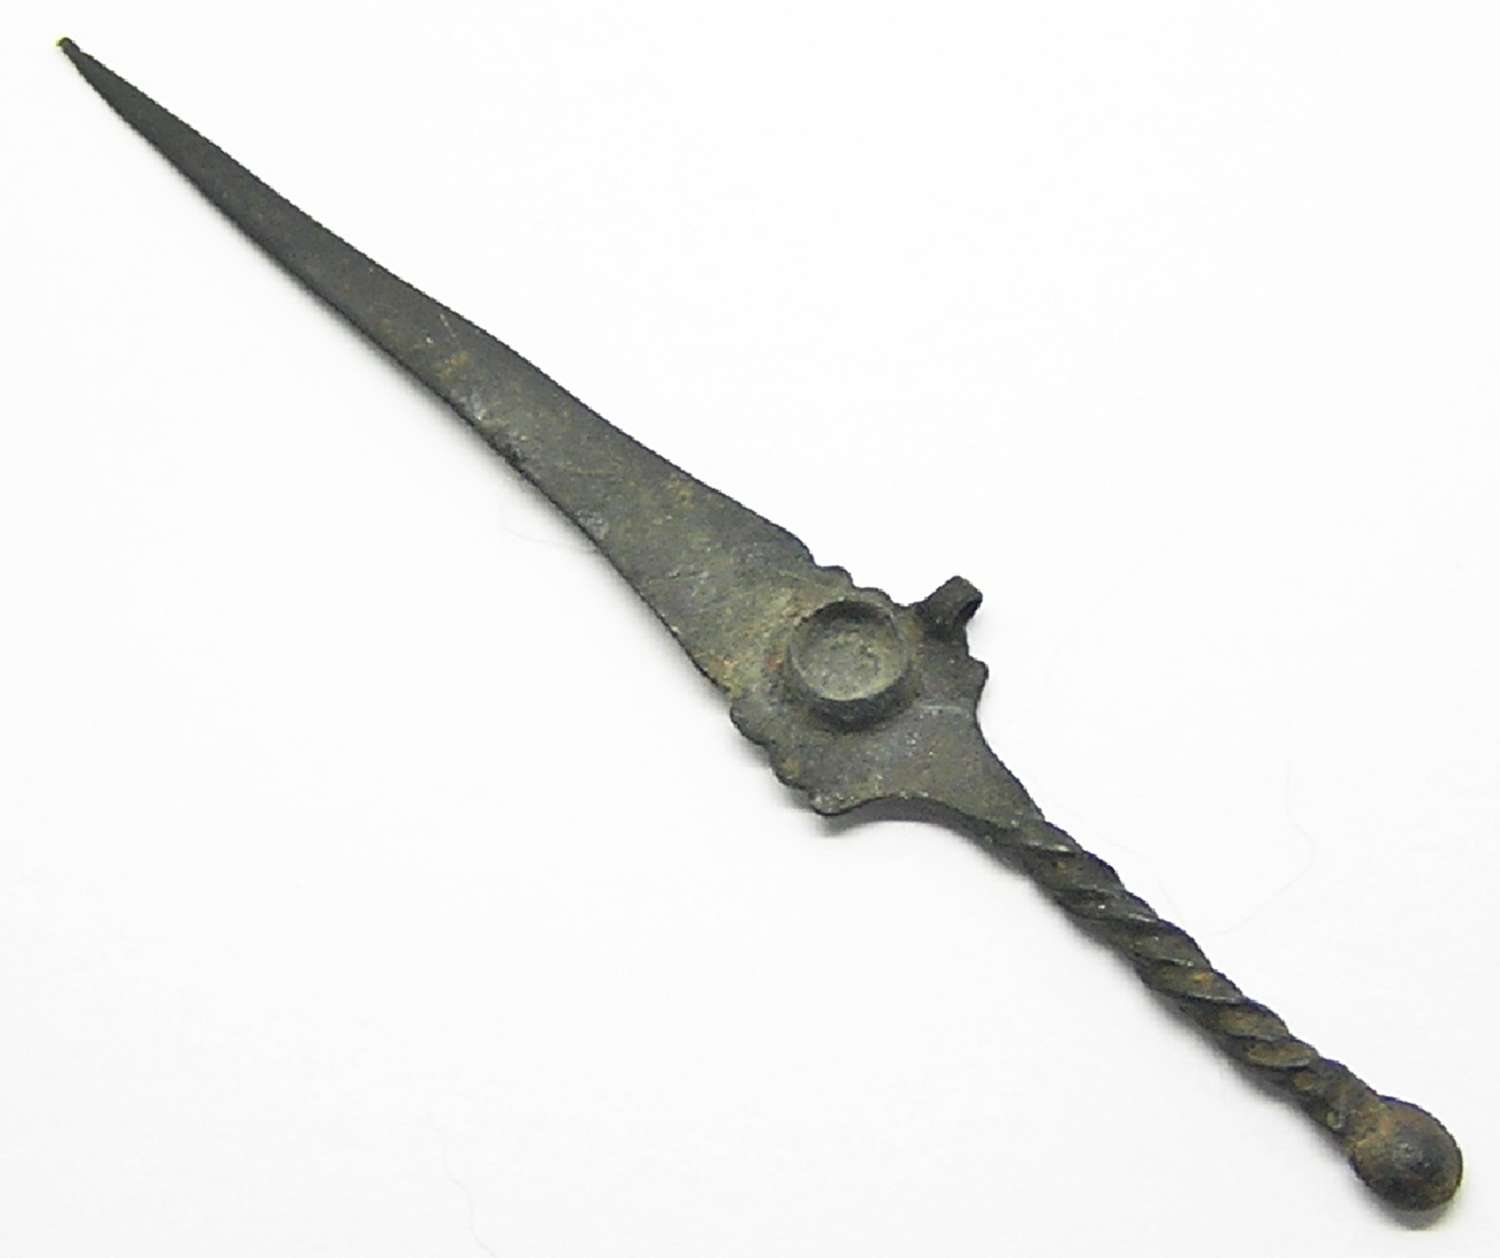 Tudor copper-alloy Toothpick Ear-scoop shaped as a dagger pendant